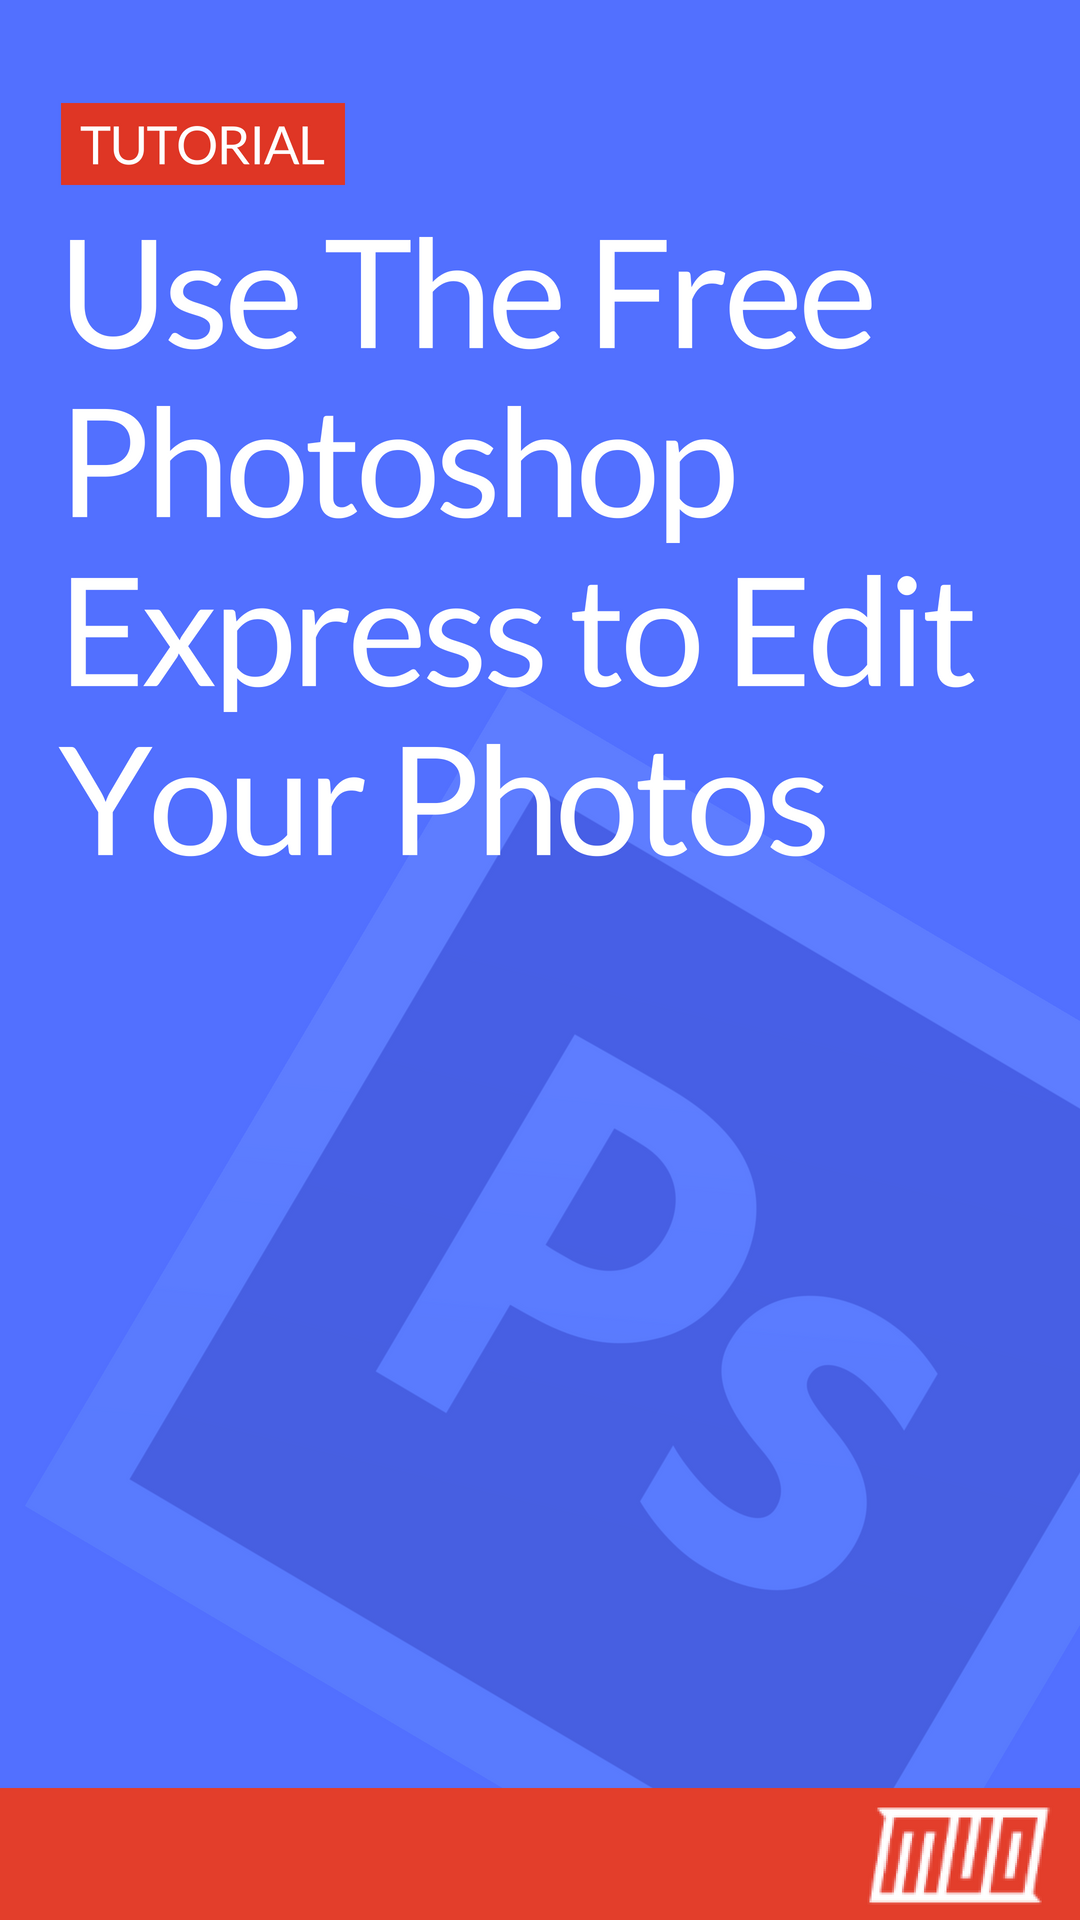 Adobe photoshop express free apk